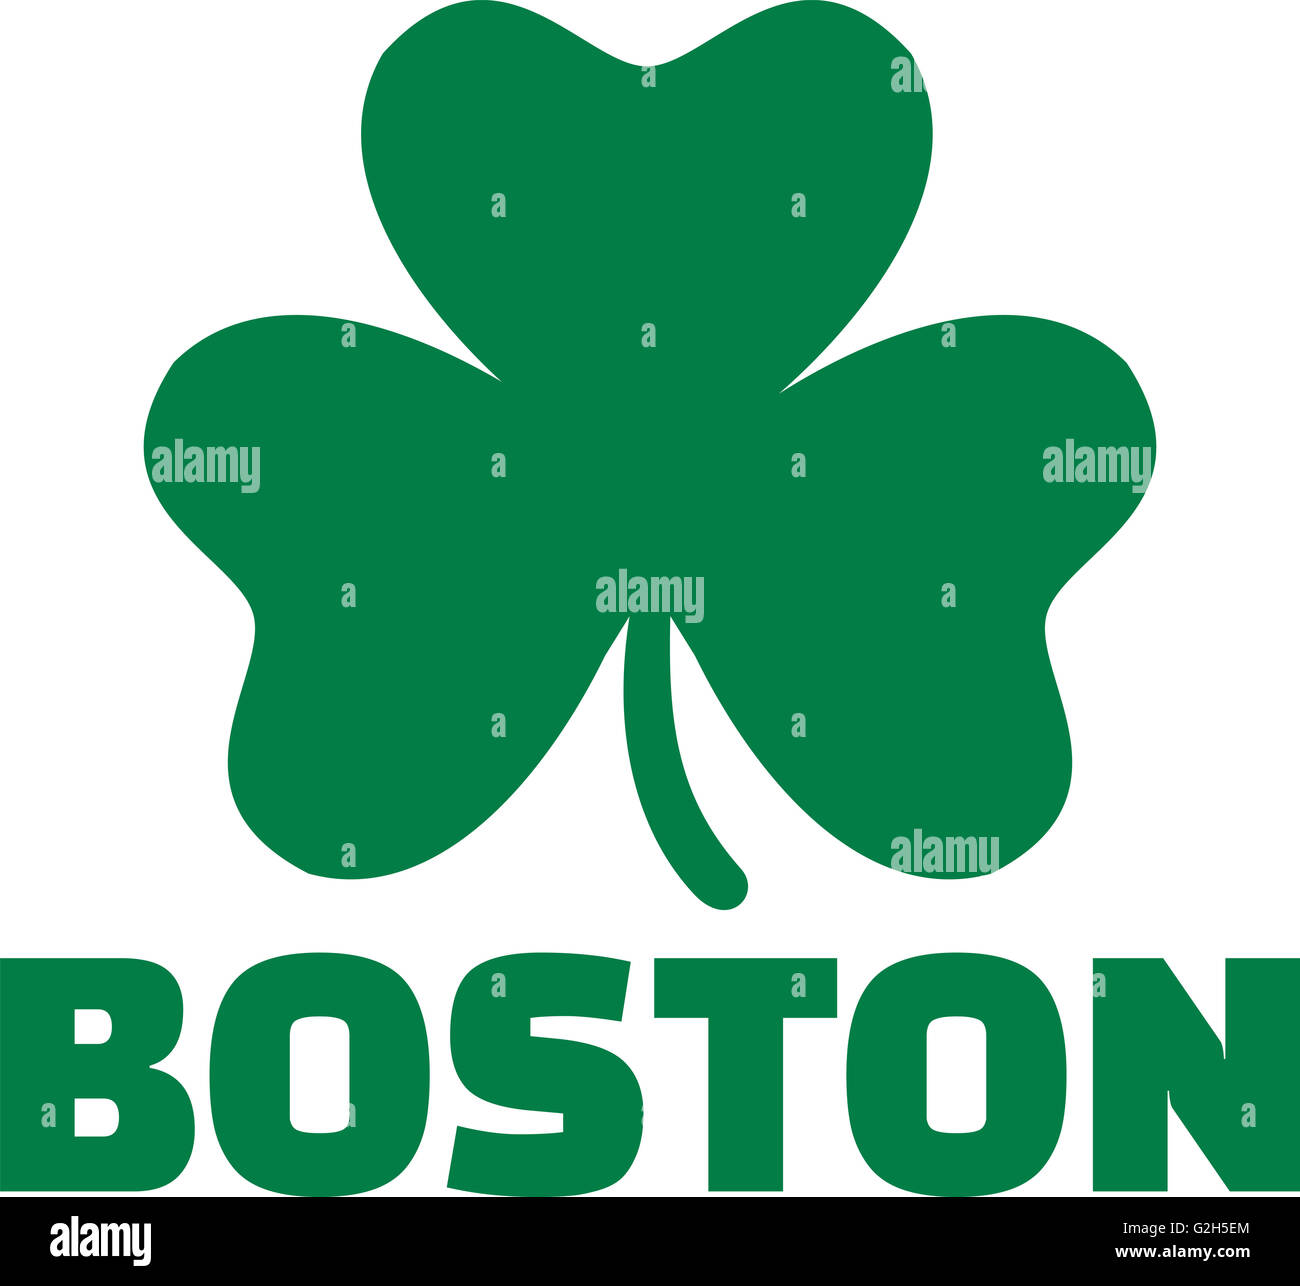 Boston with green shamrock Stock Photo